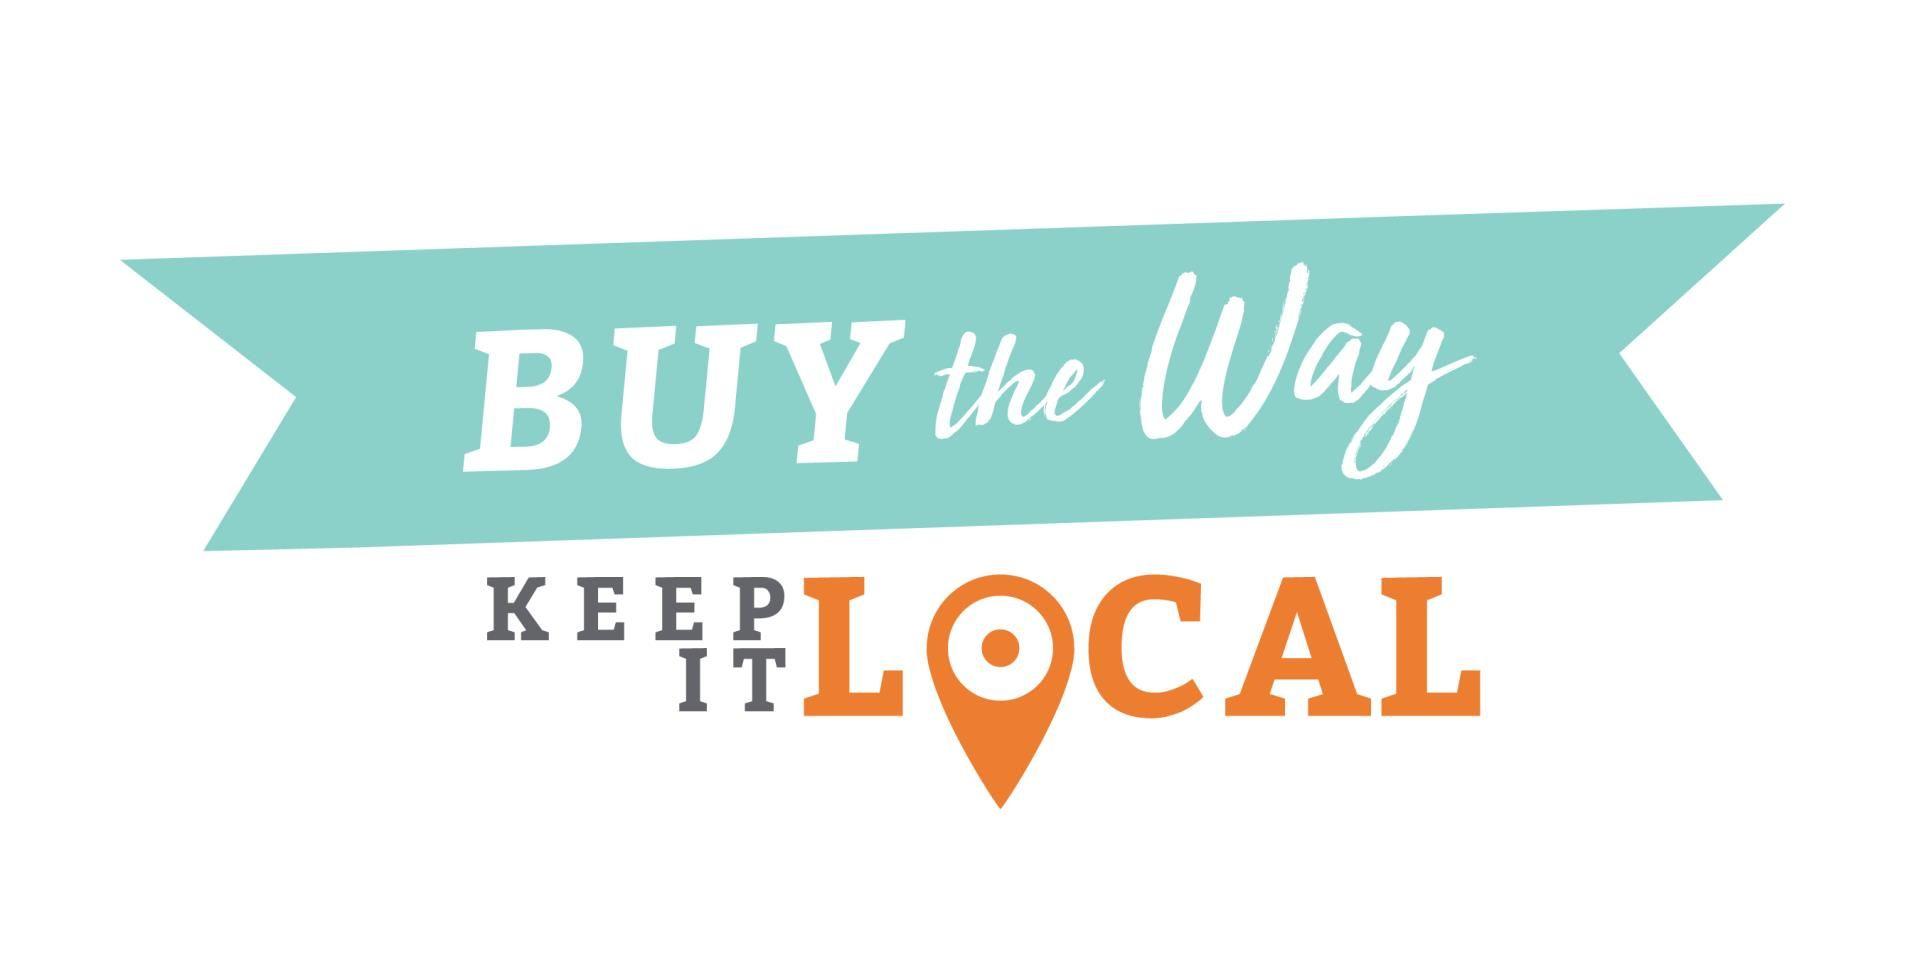 Keep It Local Logo - Buy the Way: Keep it Local. City of Amarillo, TX